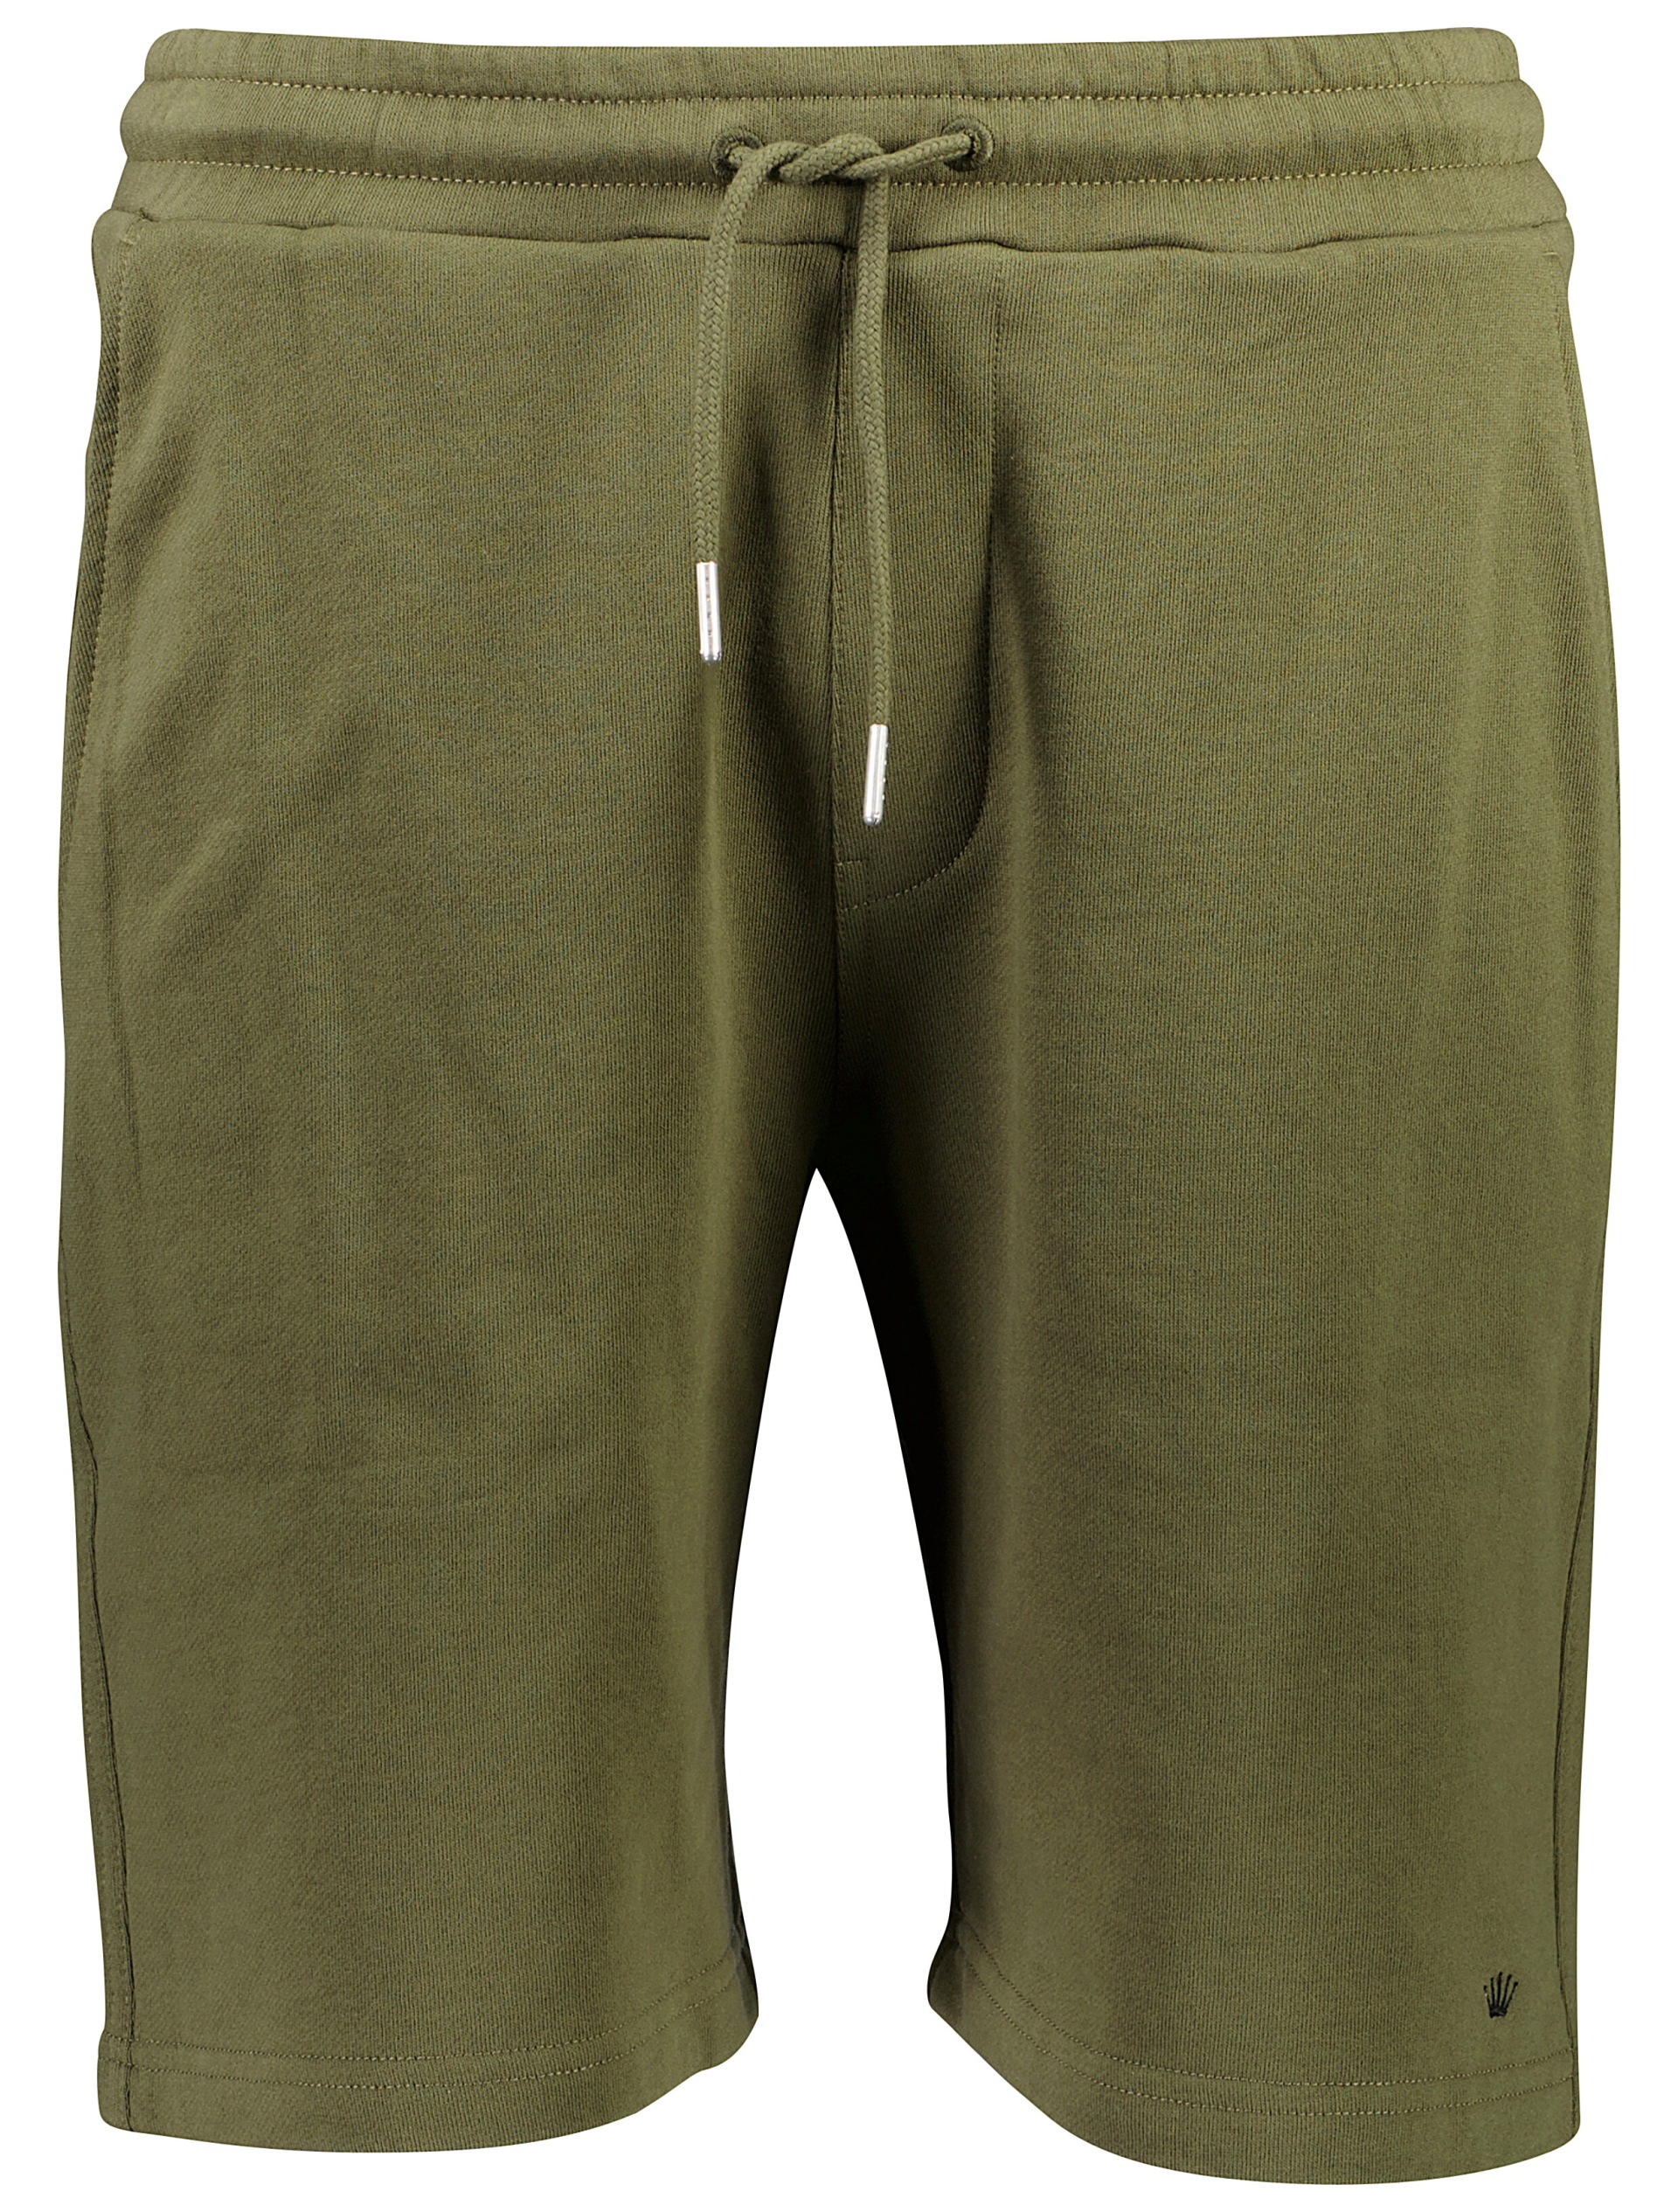 Junk de Luxe Casual shorts grön / army